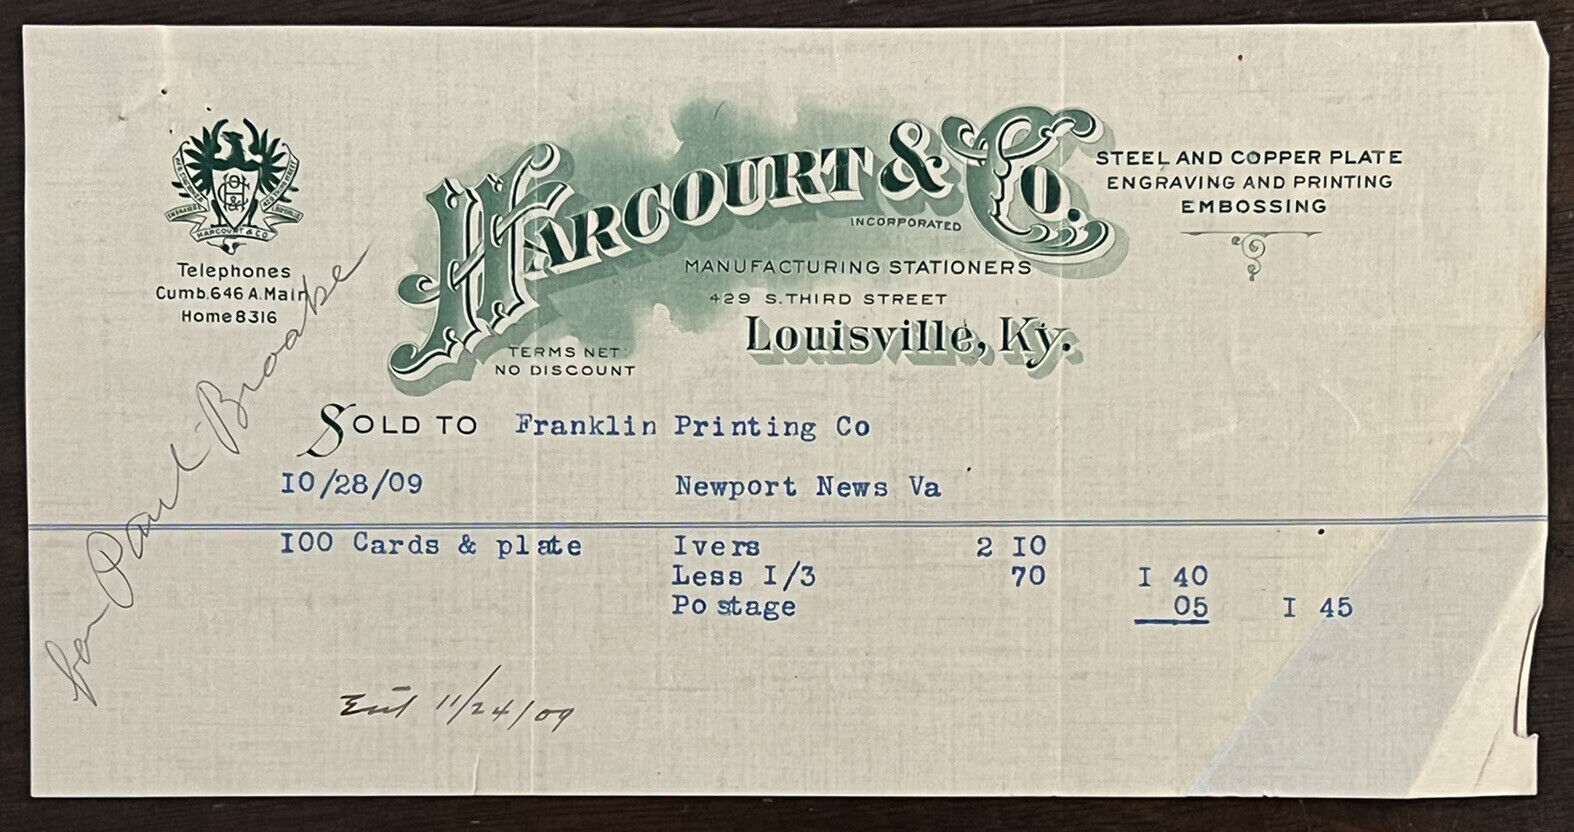 1909 HARDCOURT & CO. LOUISVILLE KENTUCKY RECEIPT FOR CARDS & PLATES